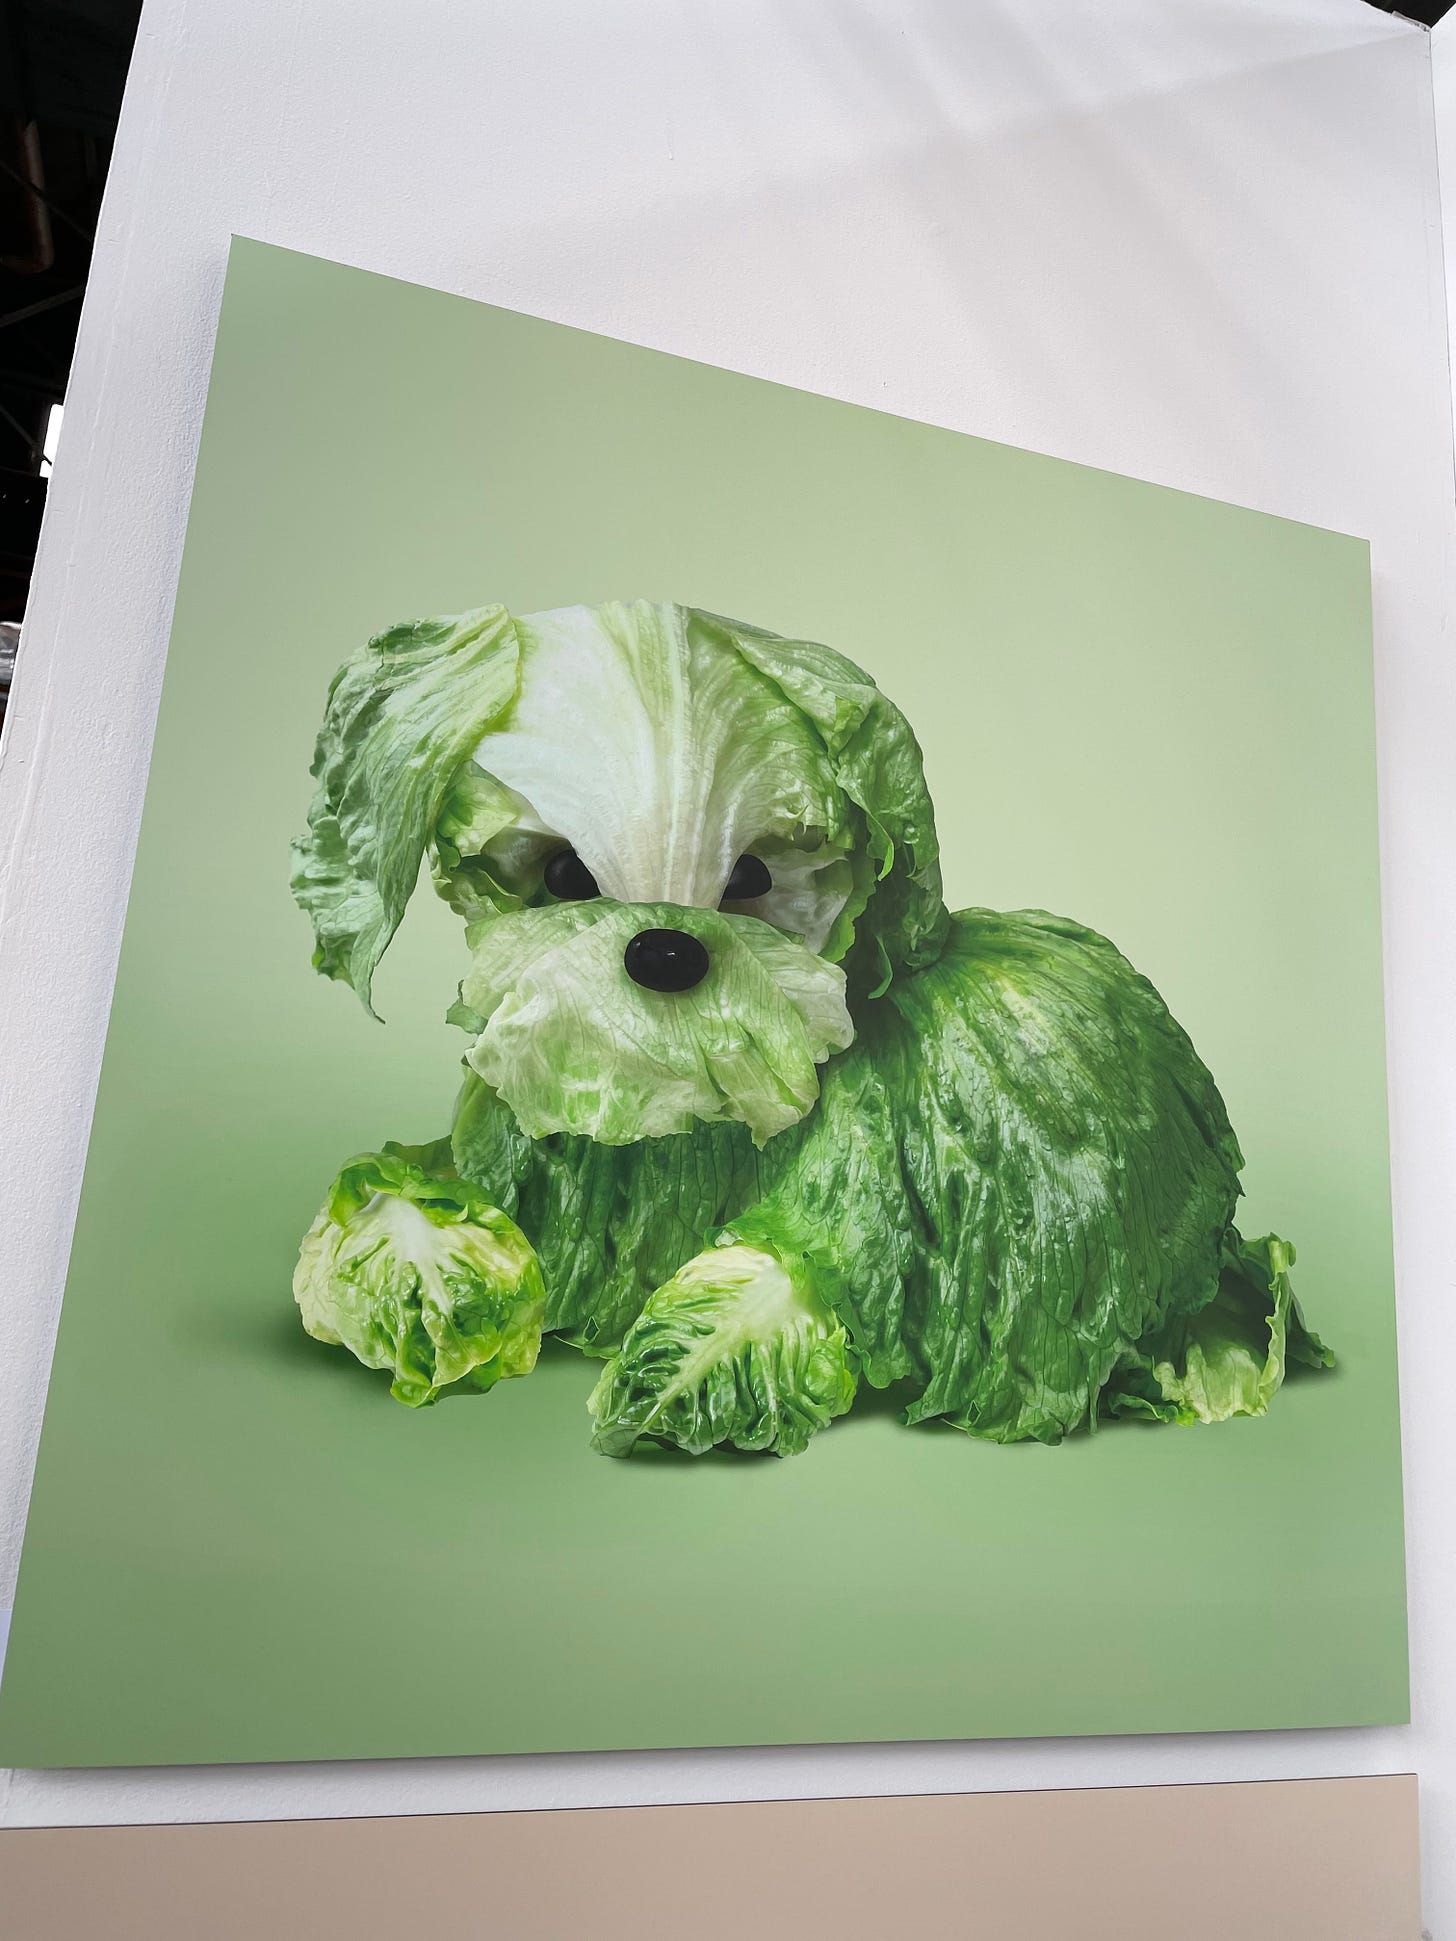 photo of lettuce shaped like a dog